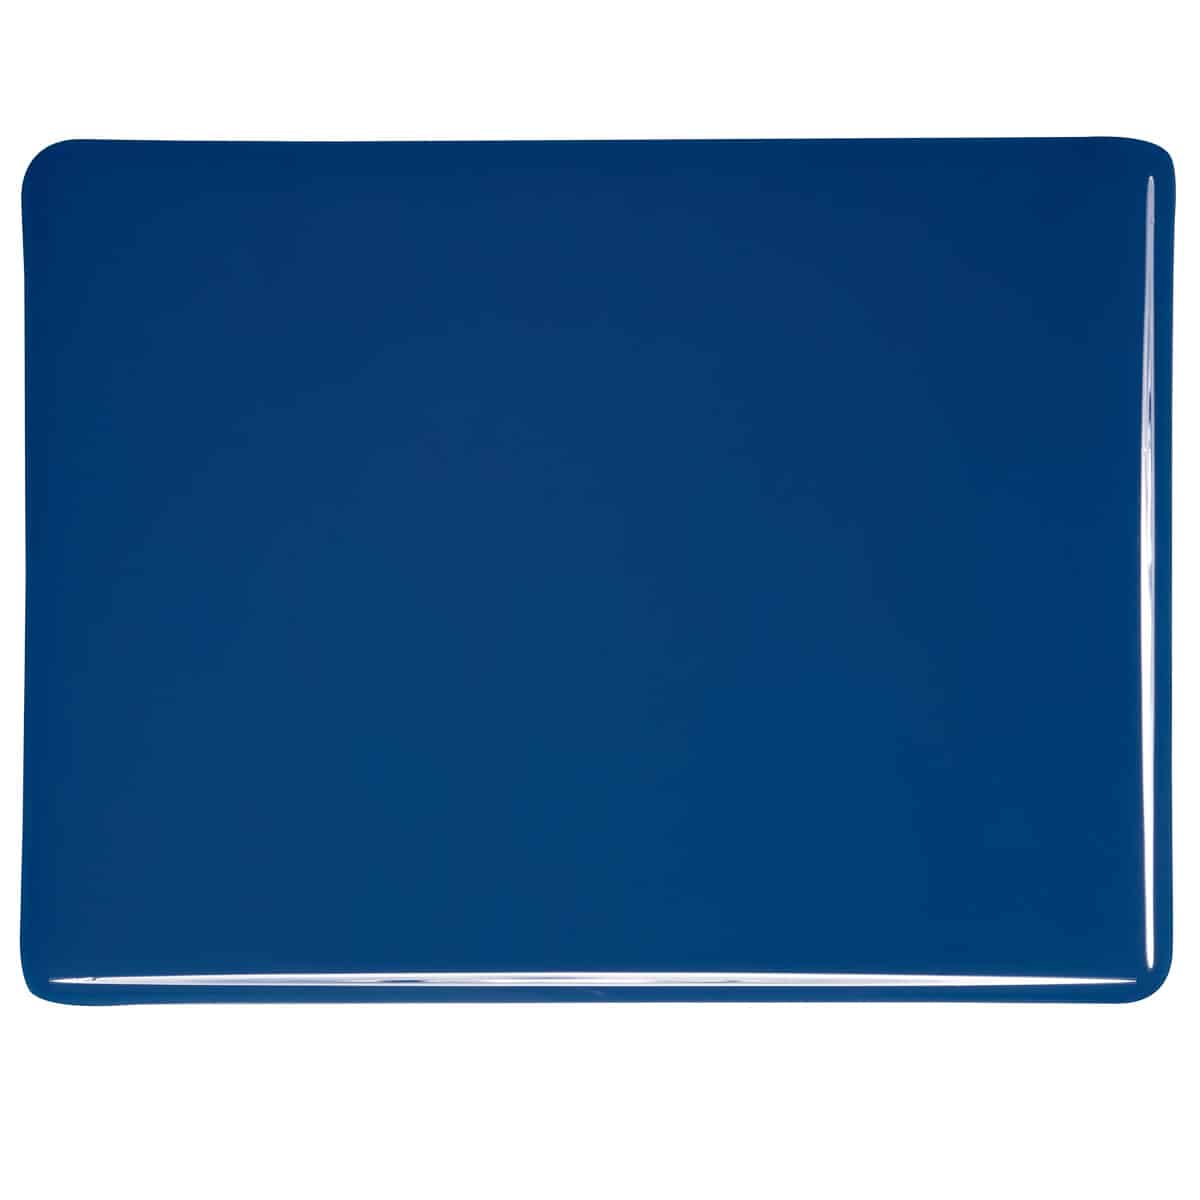 Indigo Blue sheet glass swatch